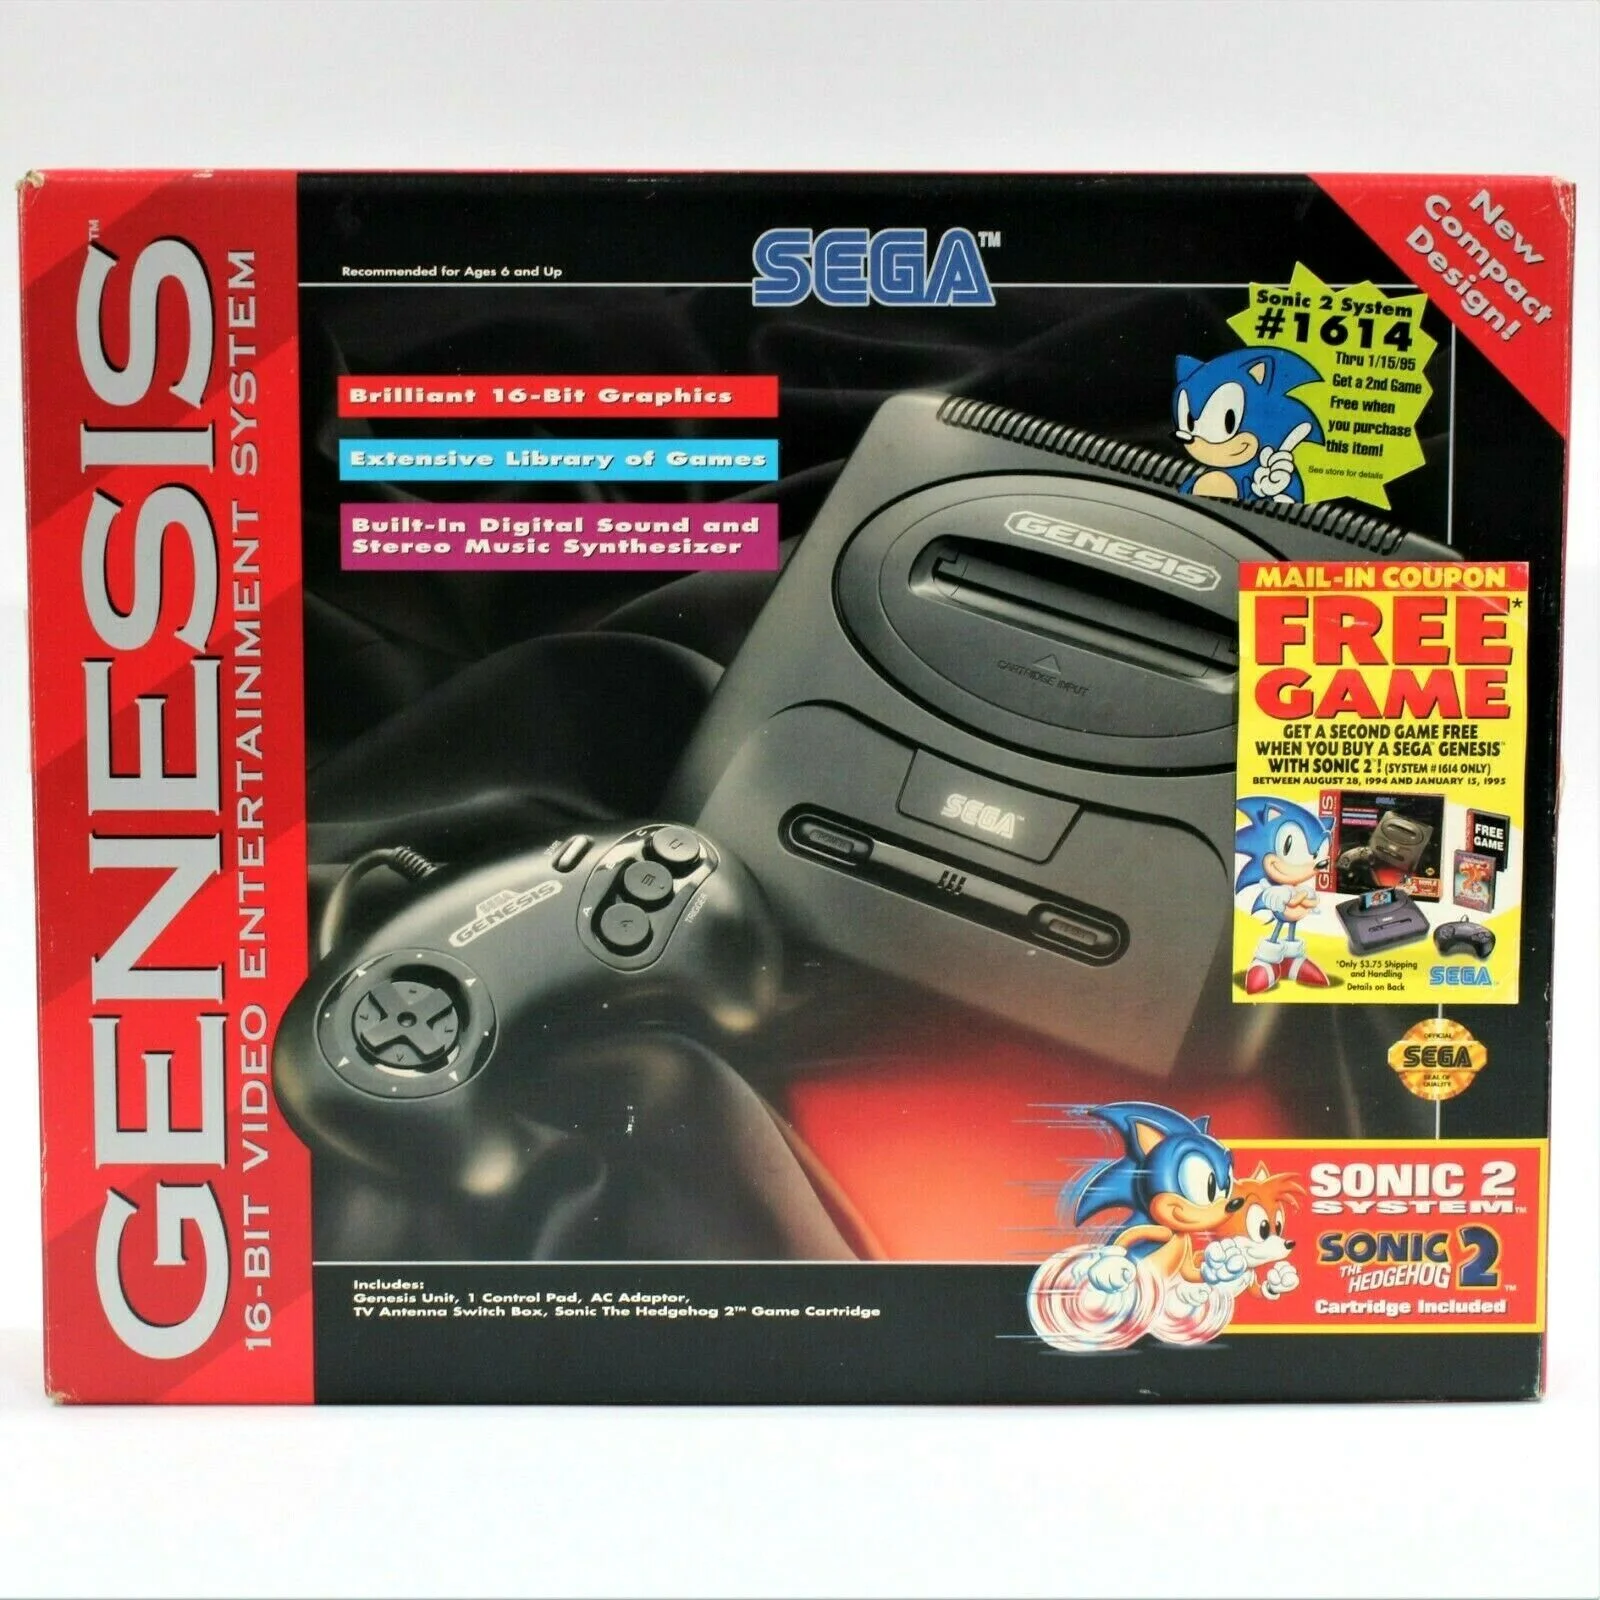  Sega Genesis Model 2 Sonic 2 System Coupon Bundle